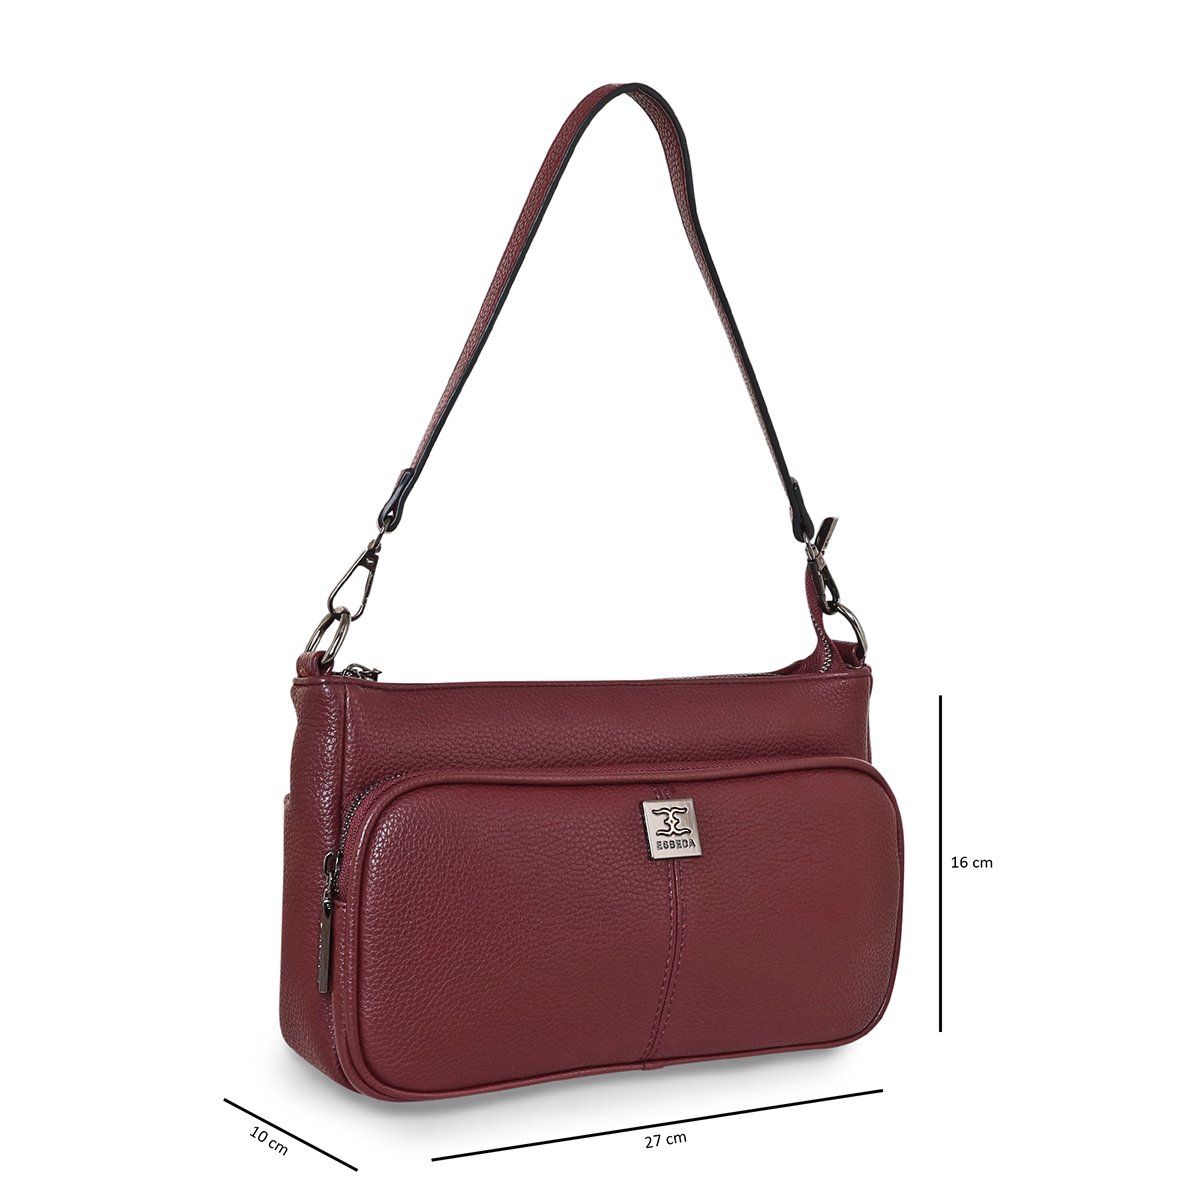 Buy Beige Handbags for Women by ESBEDA Online | Ajio.com